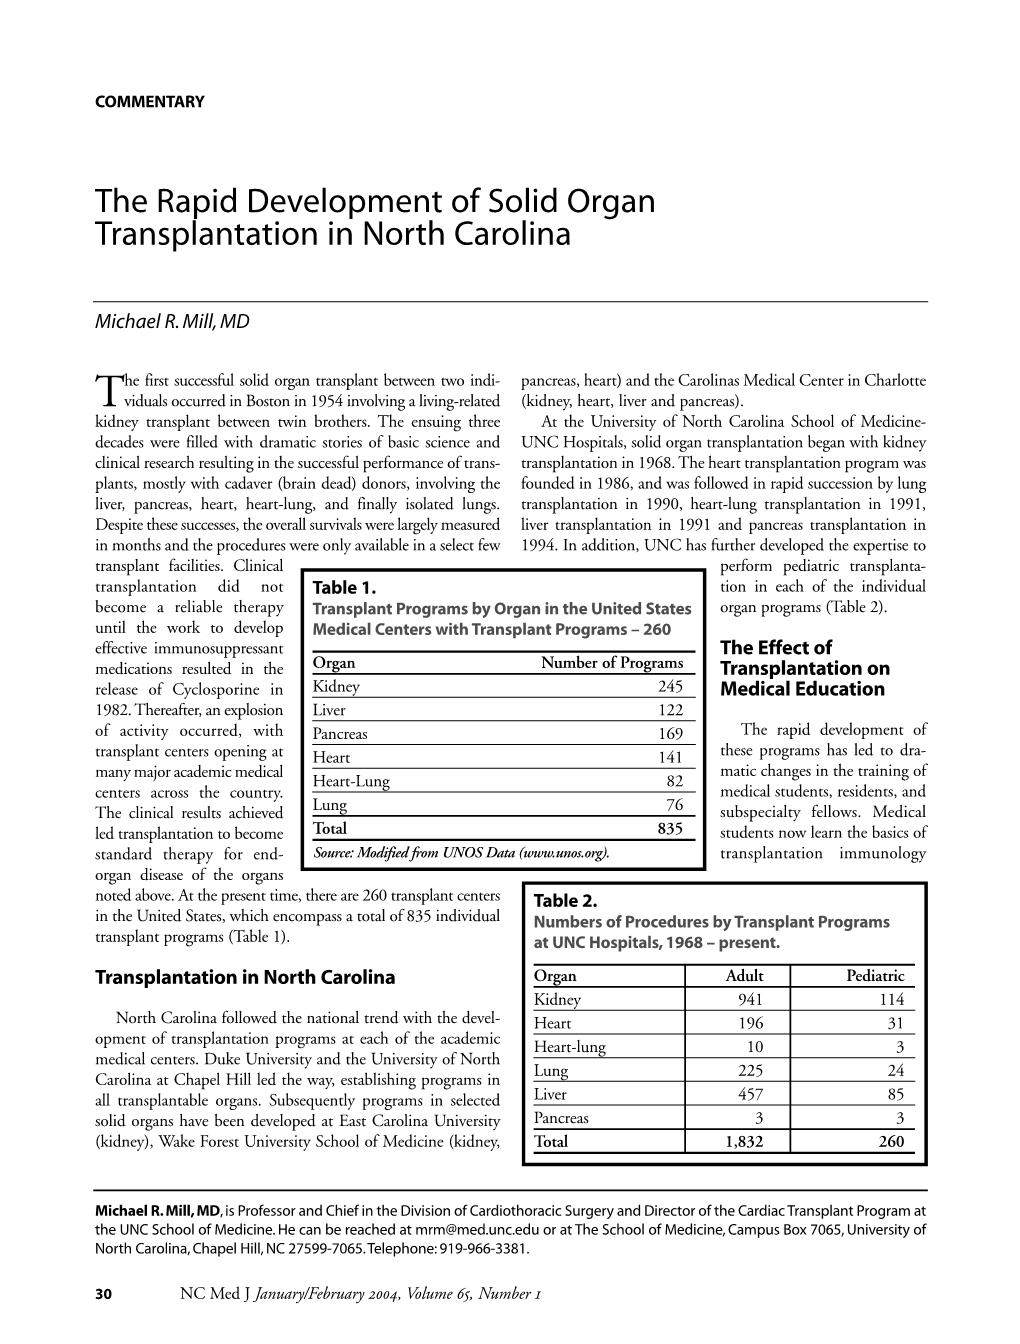 The Rapid Development of Solid Organ Transplantation in North Carolina